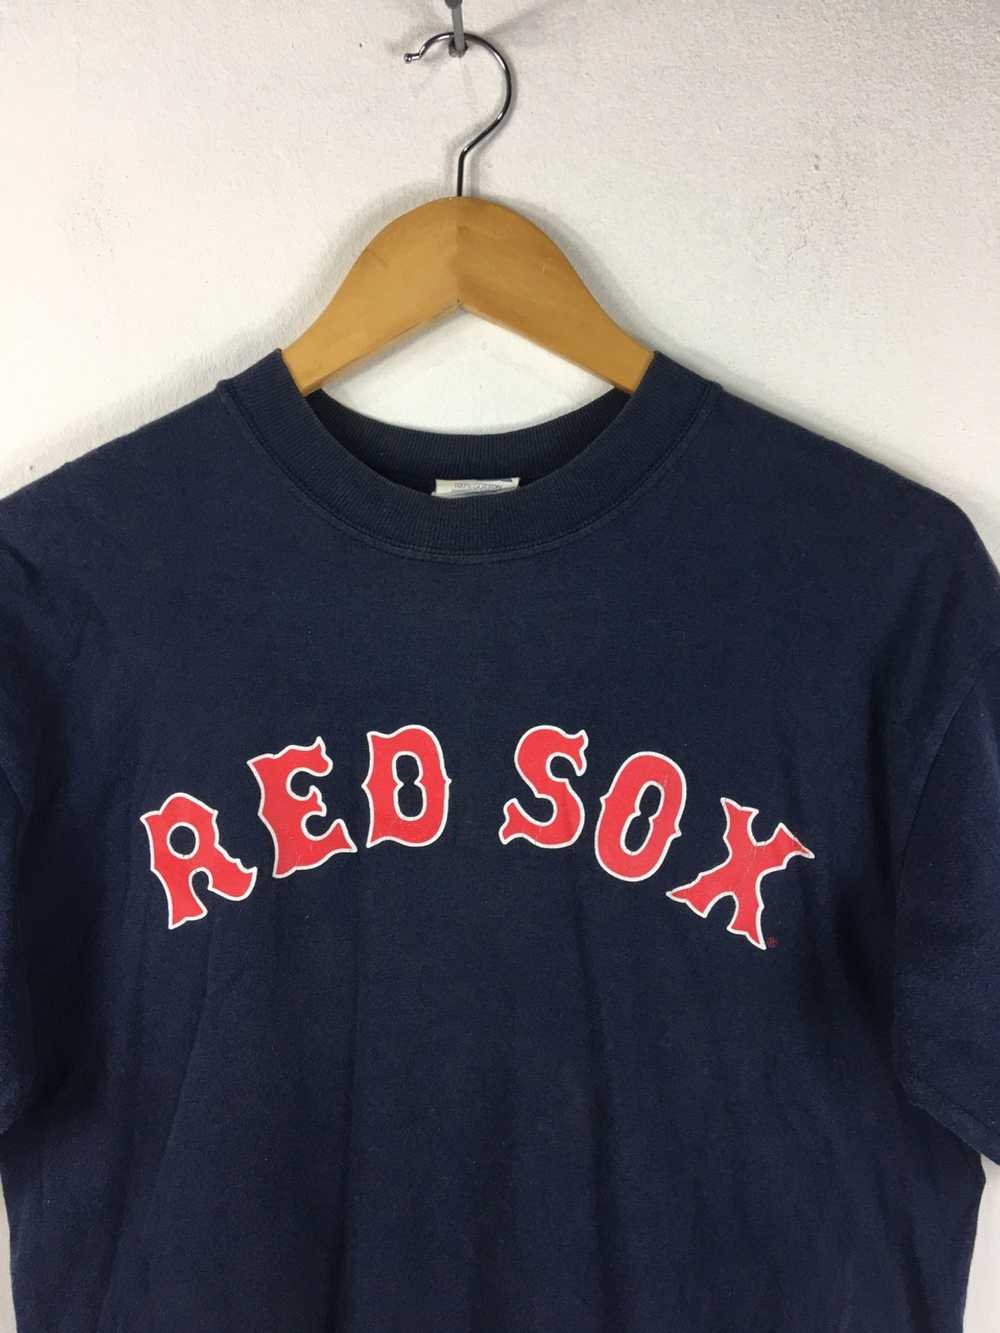 Majestic MLB ⚾️ RED SOX 00s baseball shirt made in USA